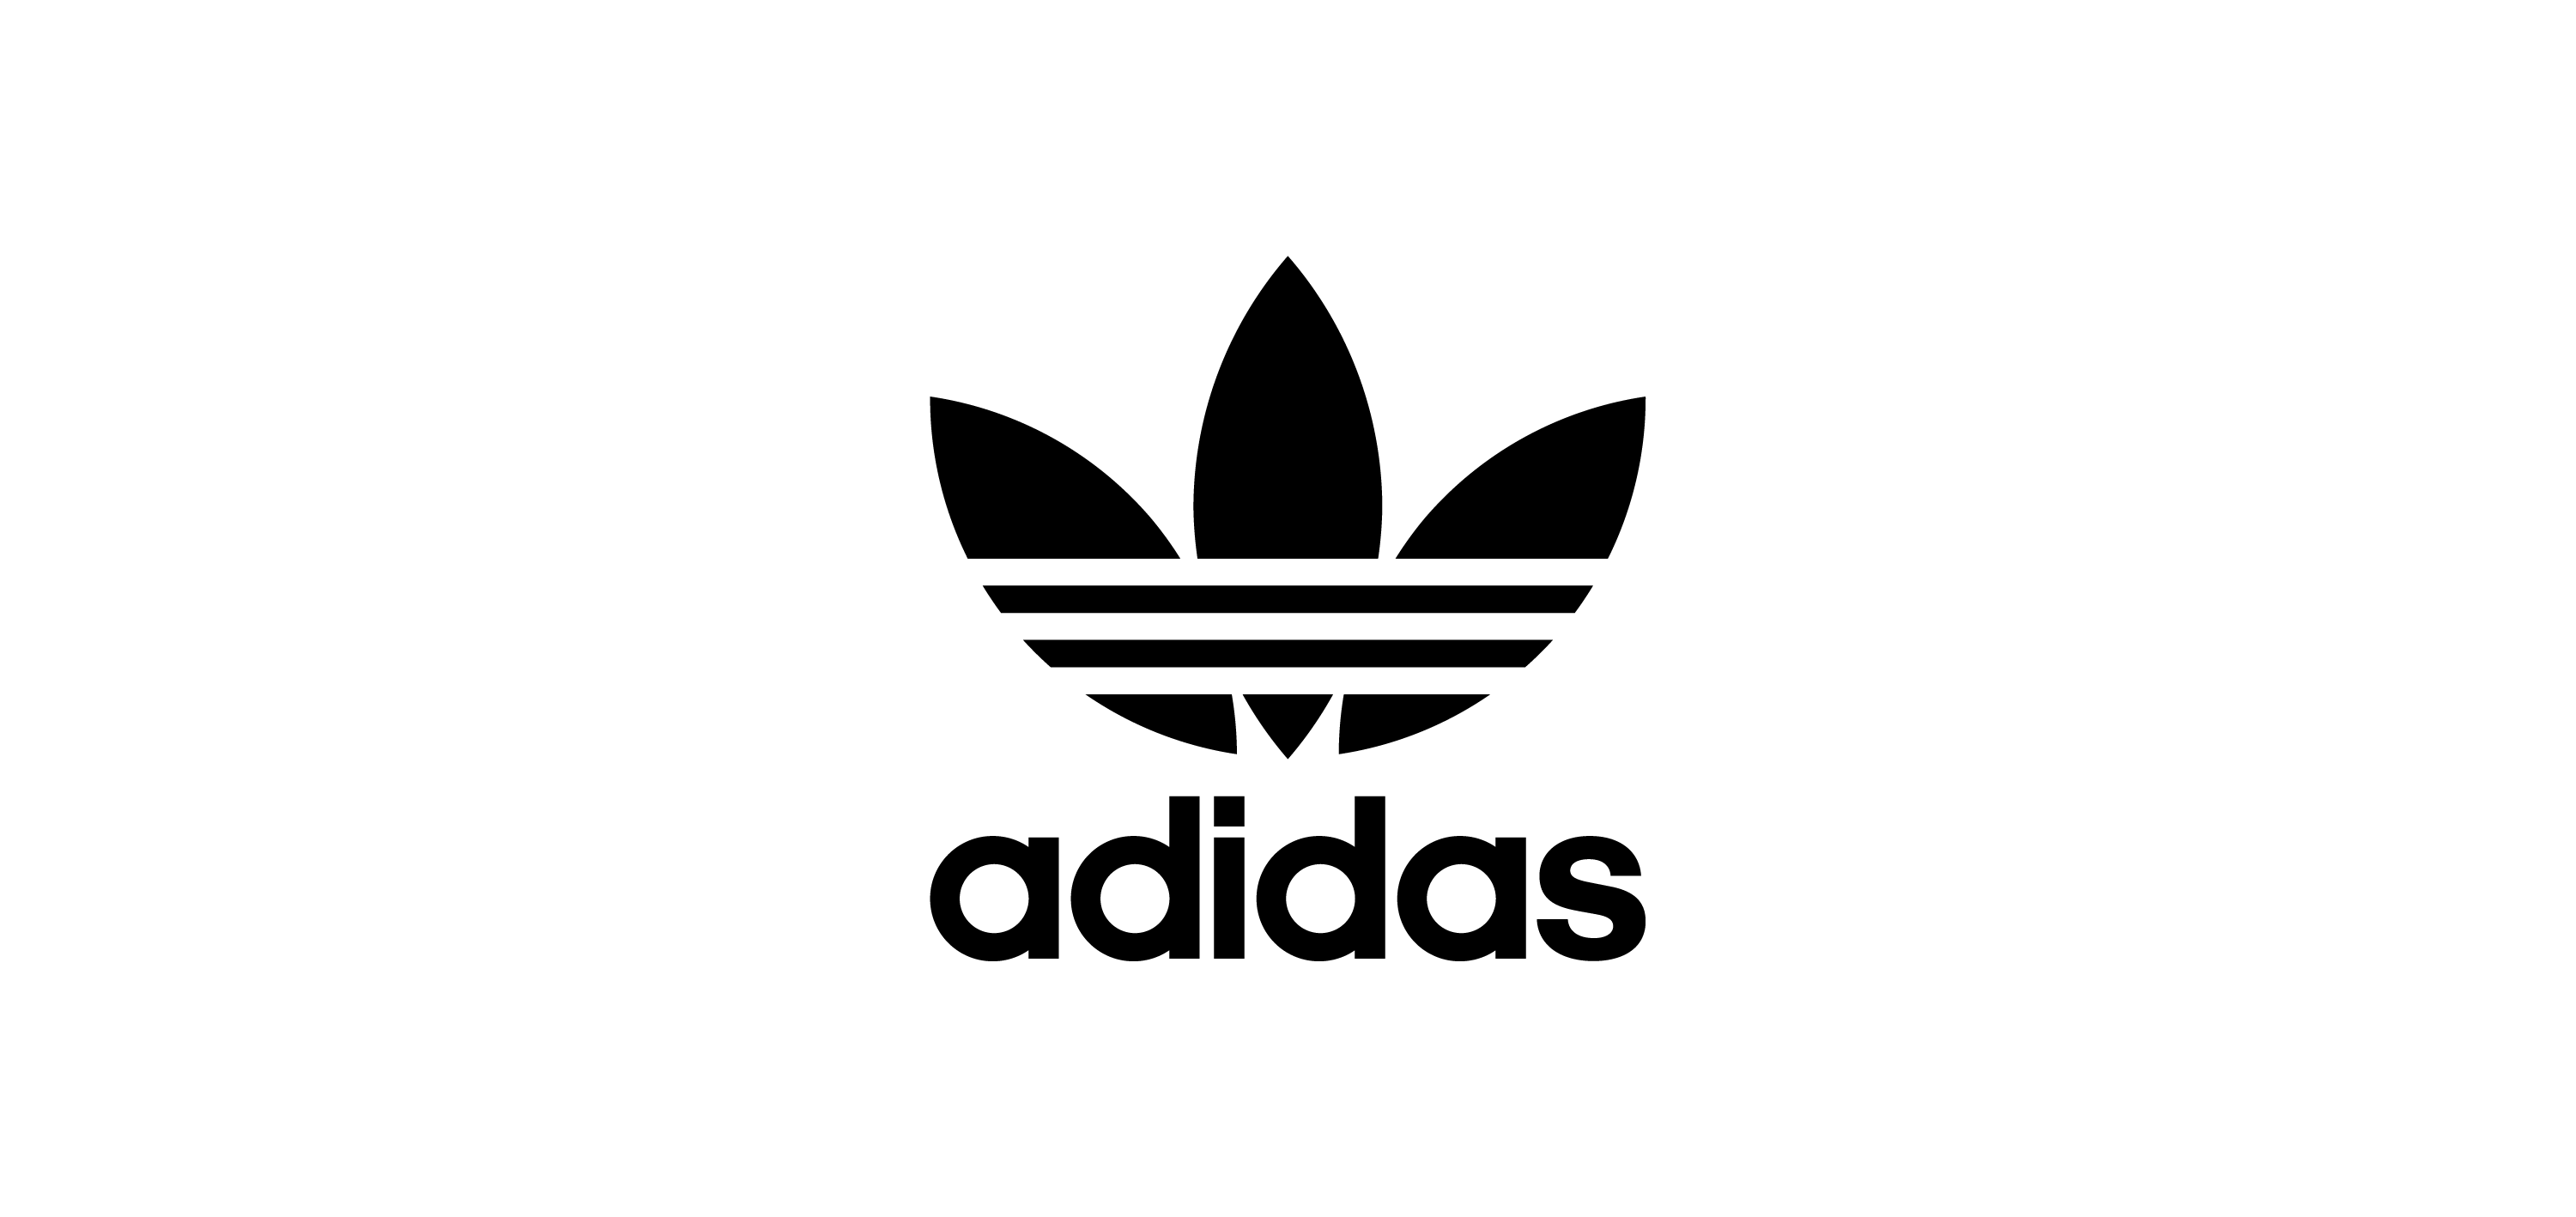 adidas old logo vector